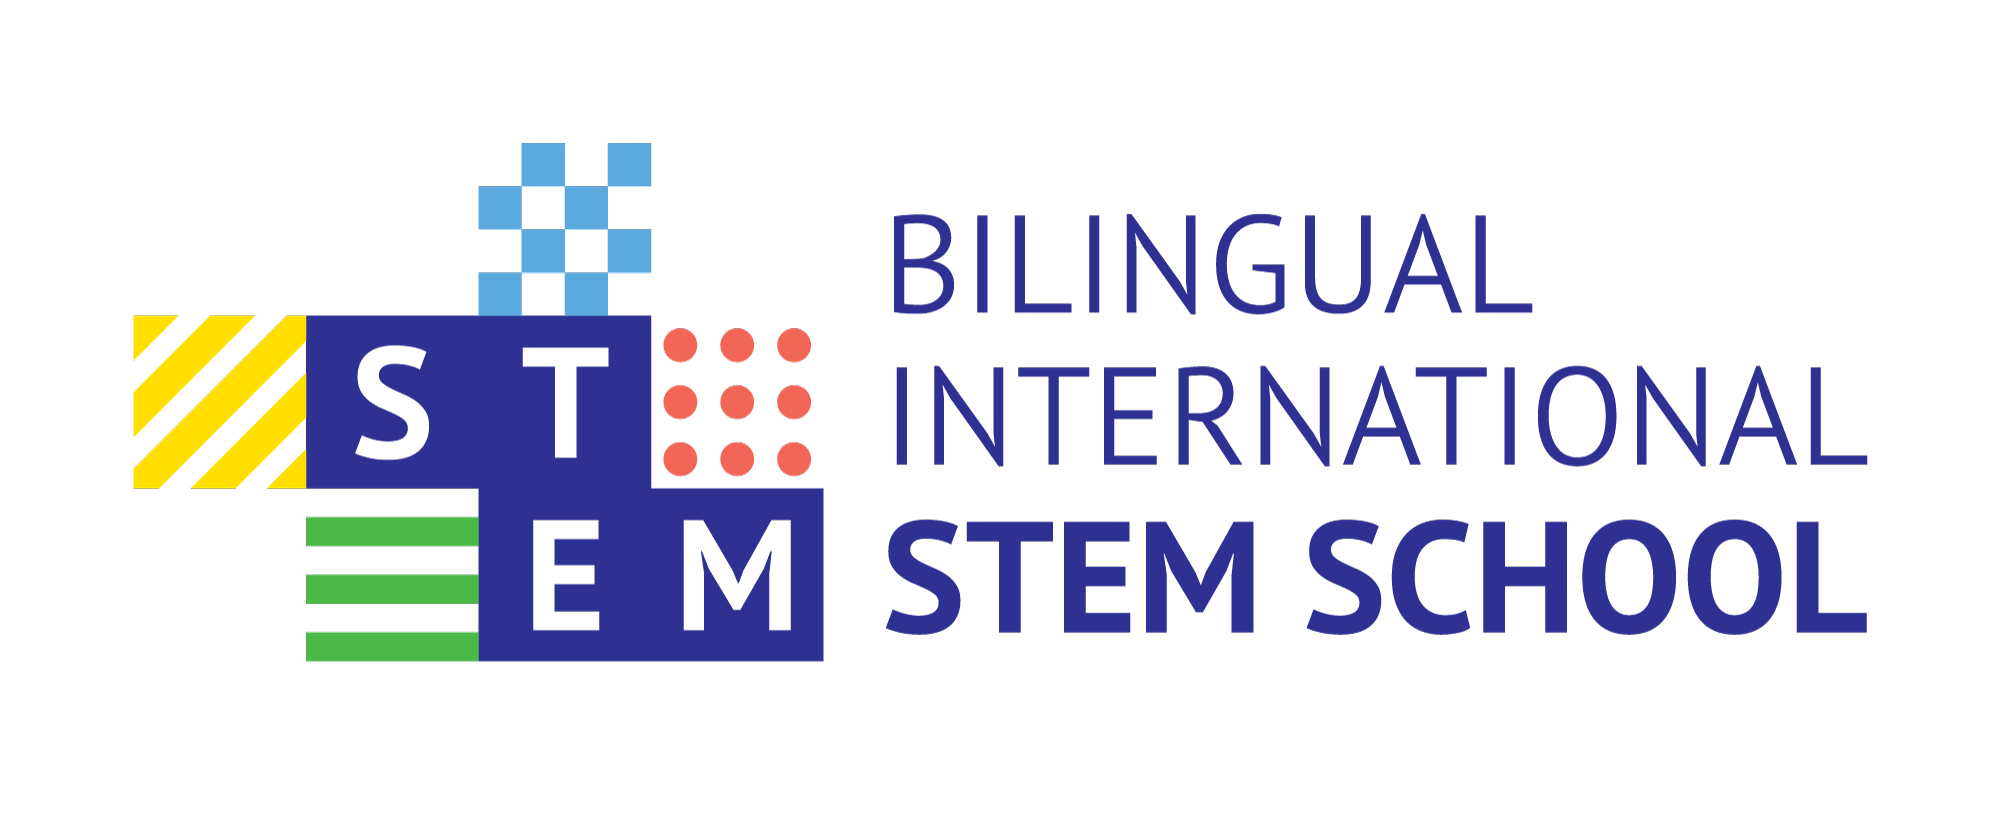 Bilingual STEM School